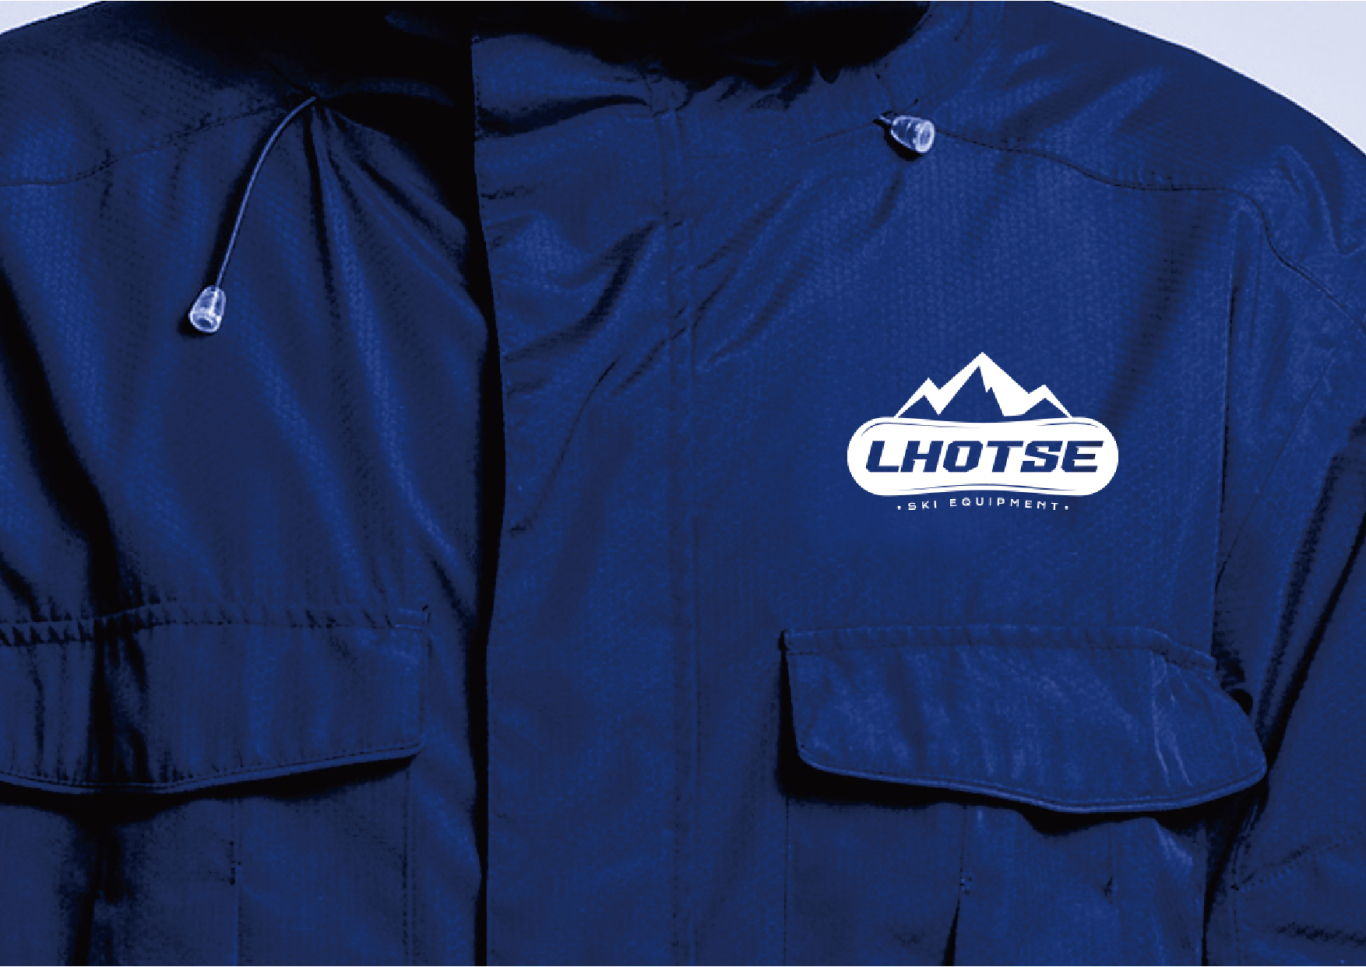 Lhotse滑雪器材logo設計圖5